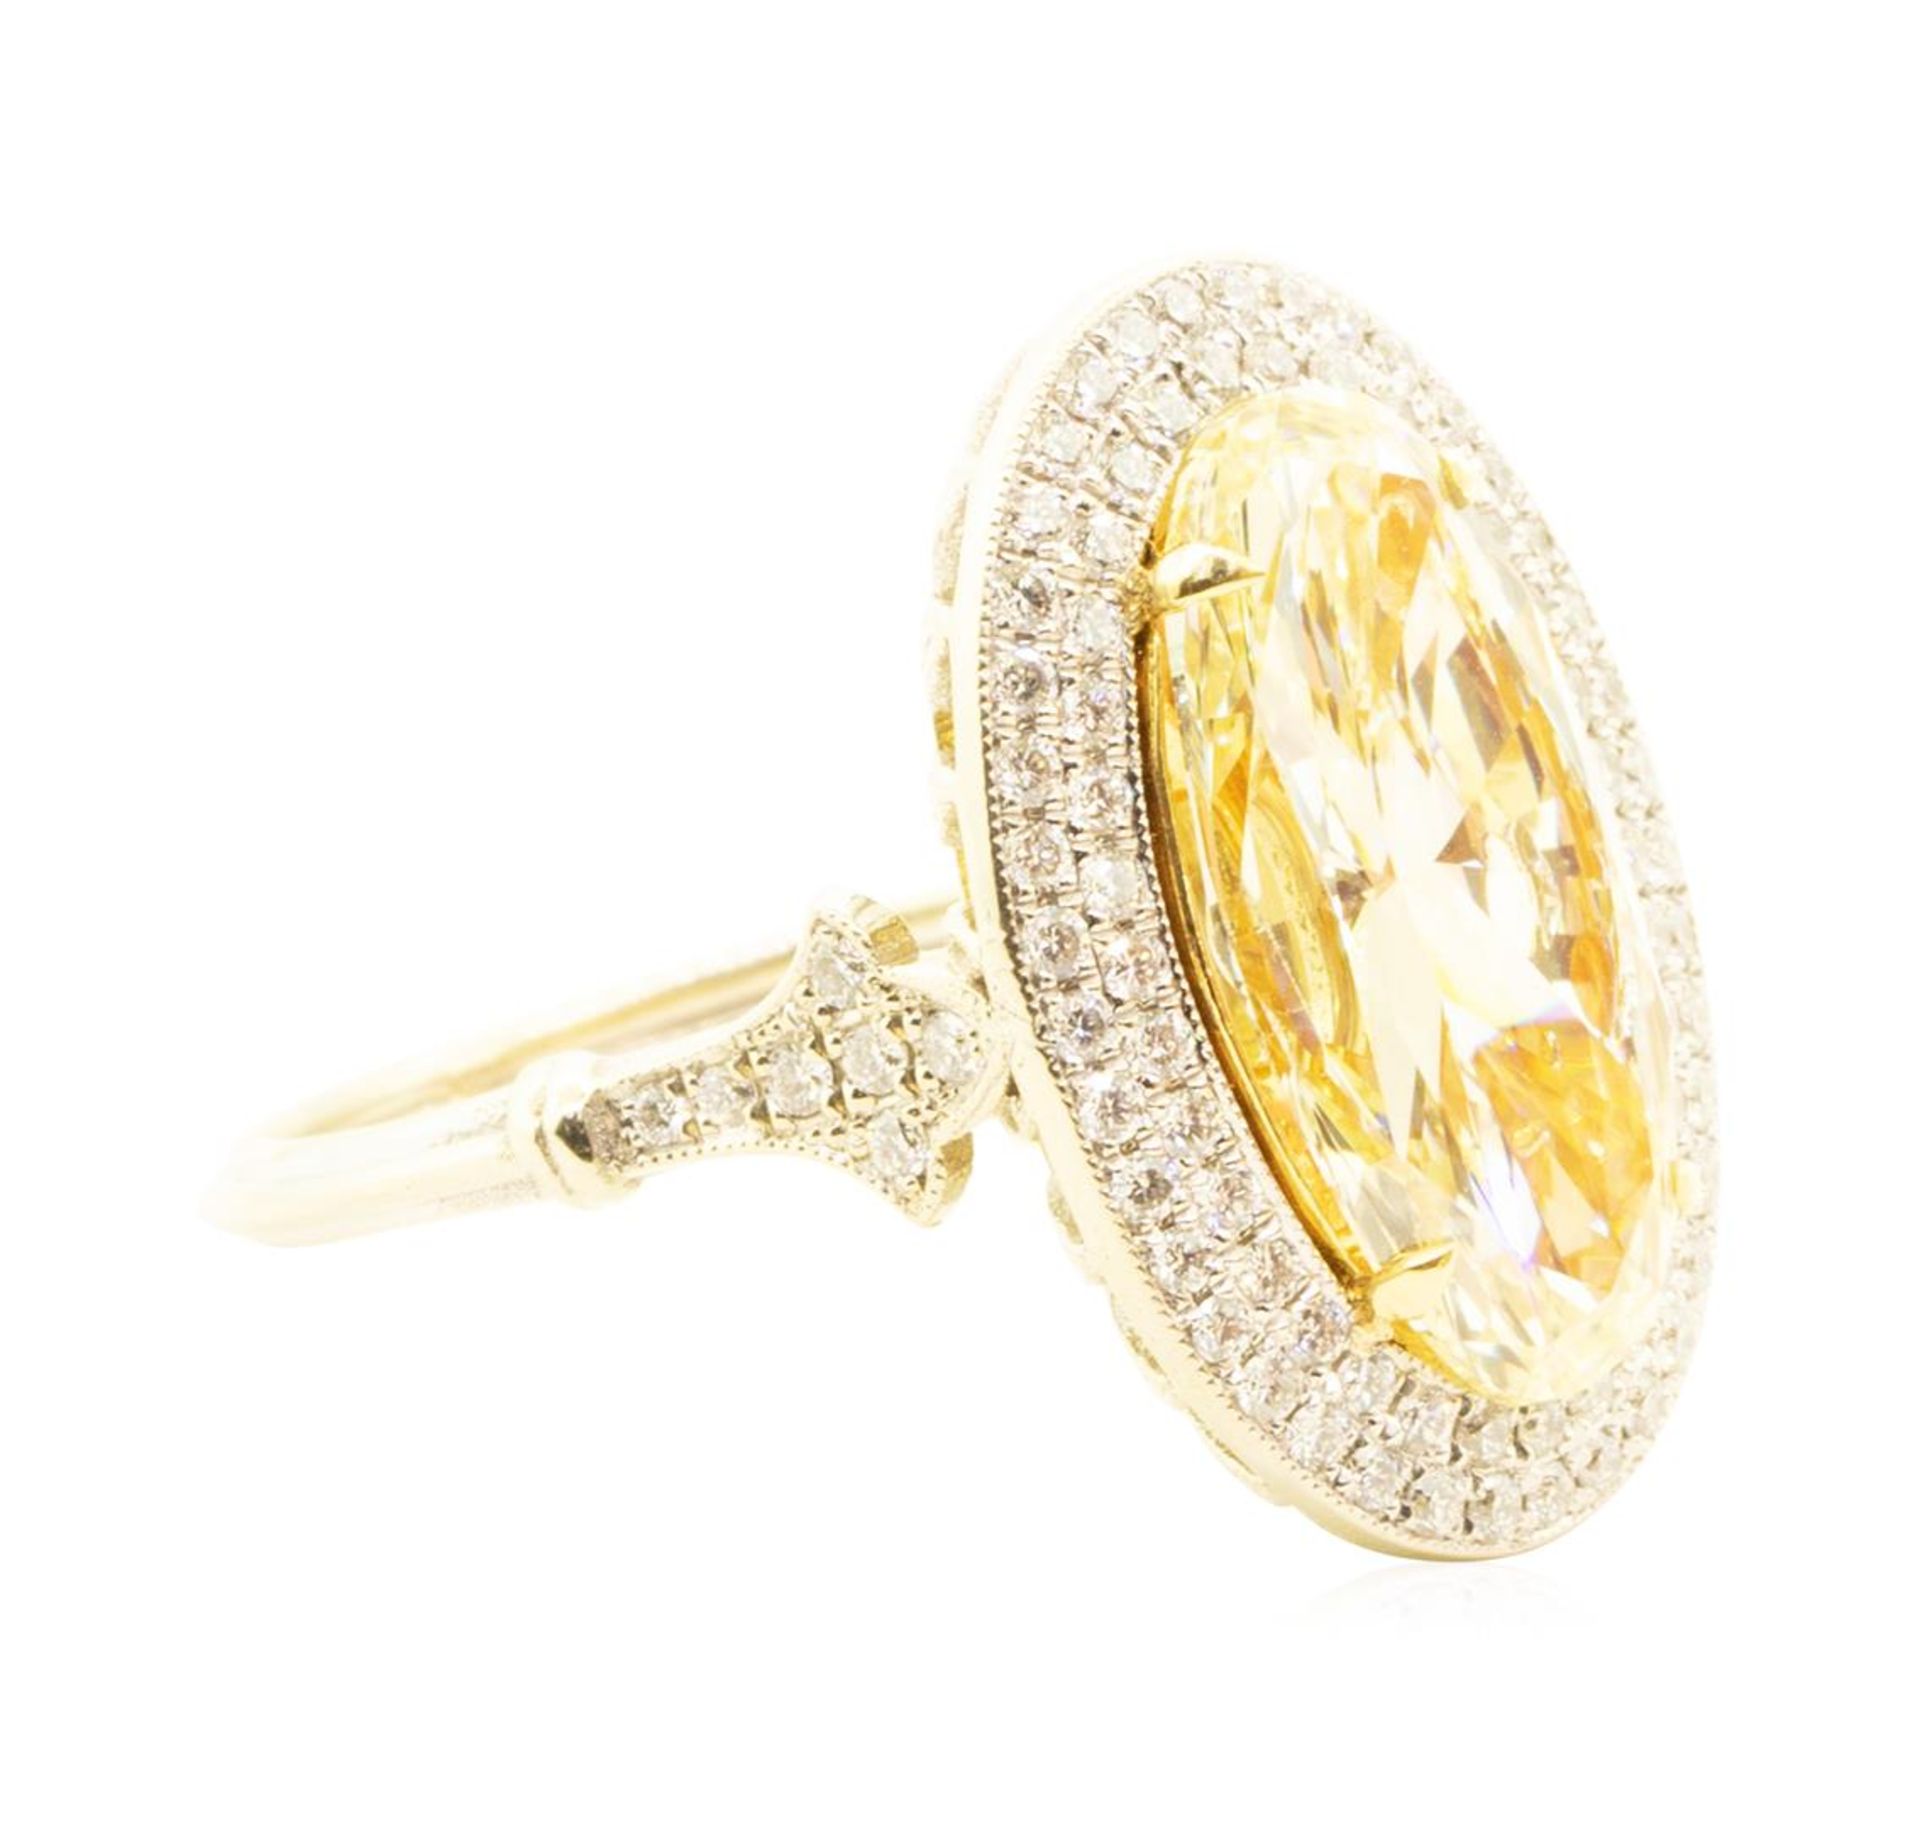 4.76 ctw Yellow Diamond Ring - 18K White and Yellow Gold - Image 2 of 5